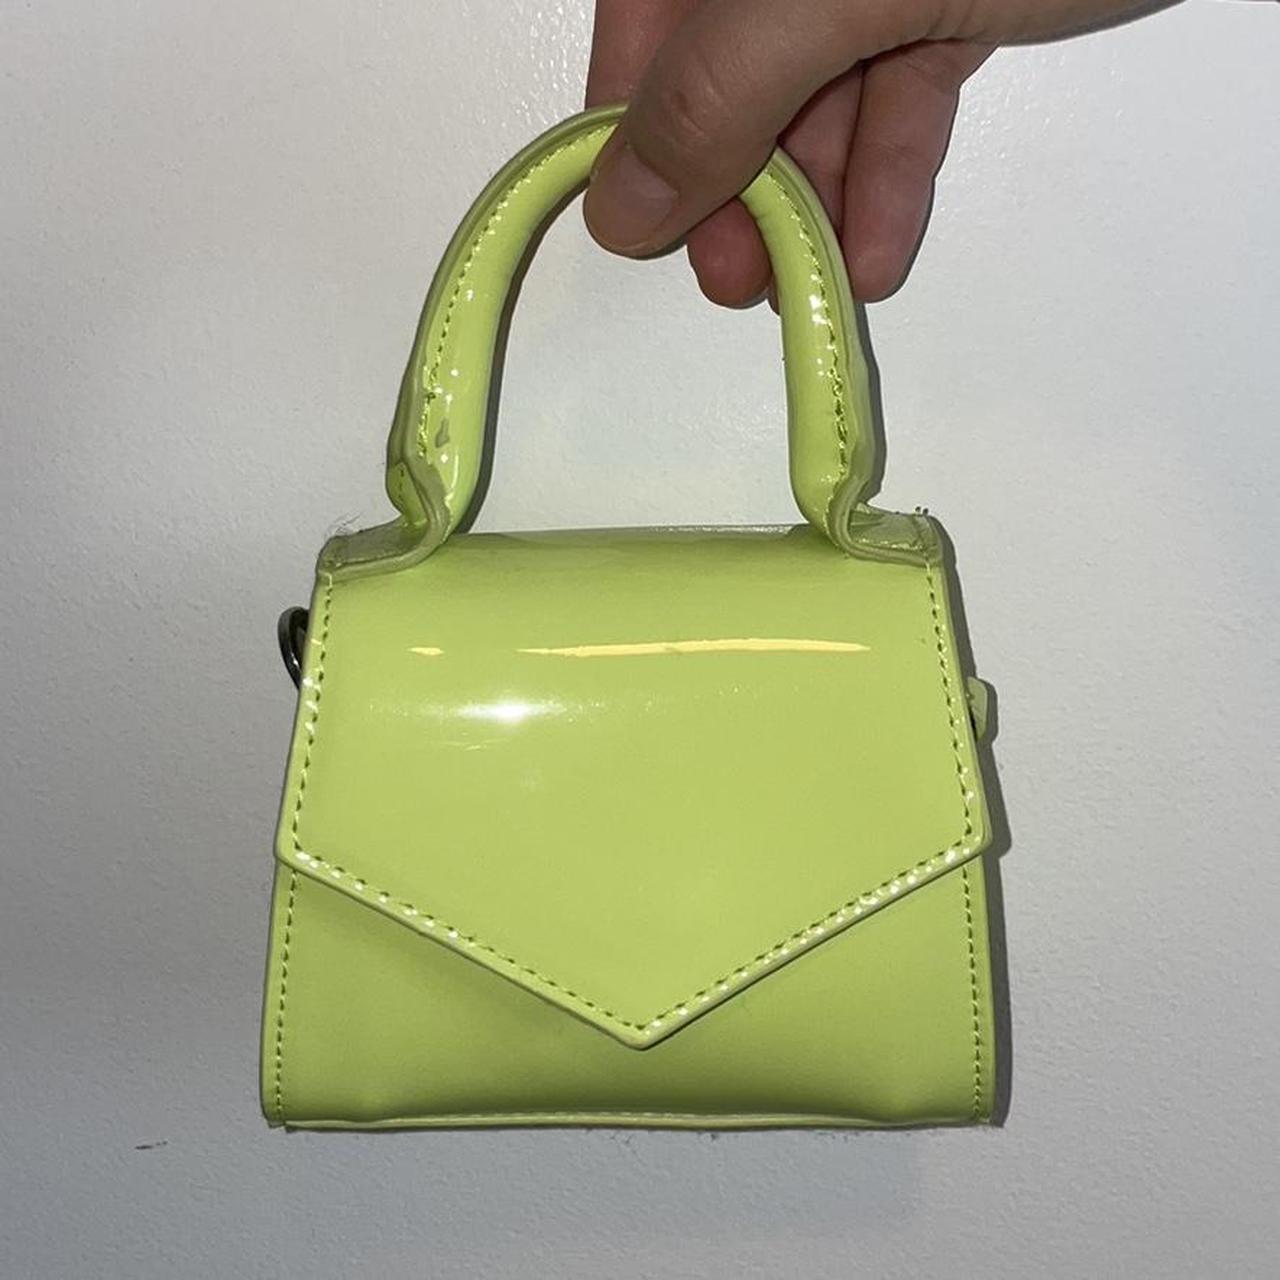 SHARIF Studio Neon Green Bag, 3 Piece Purse, Cosmetic & Phone Wristlet,  RARE Lime Celery Apple Green, White Croc Design, Top Handle, - Etsy